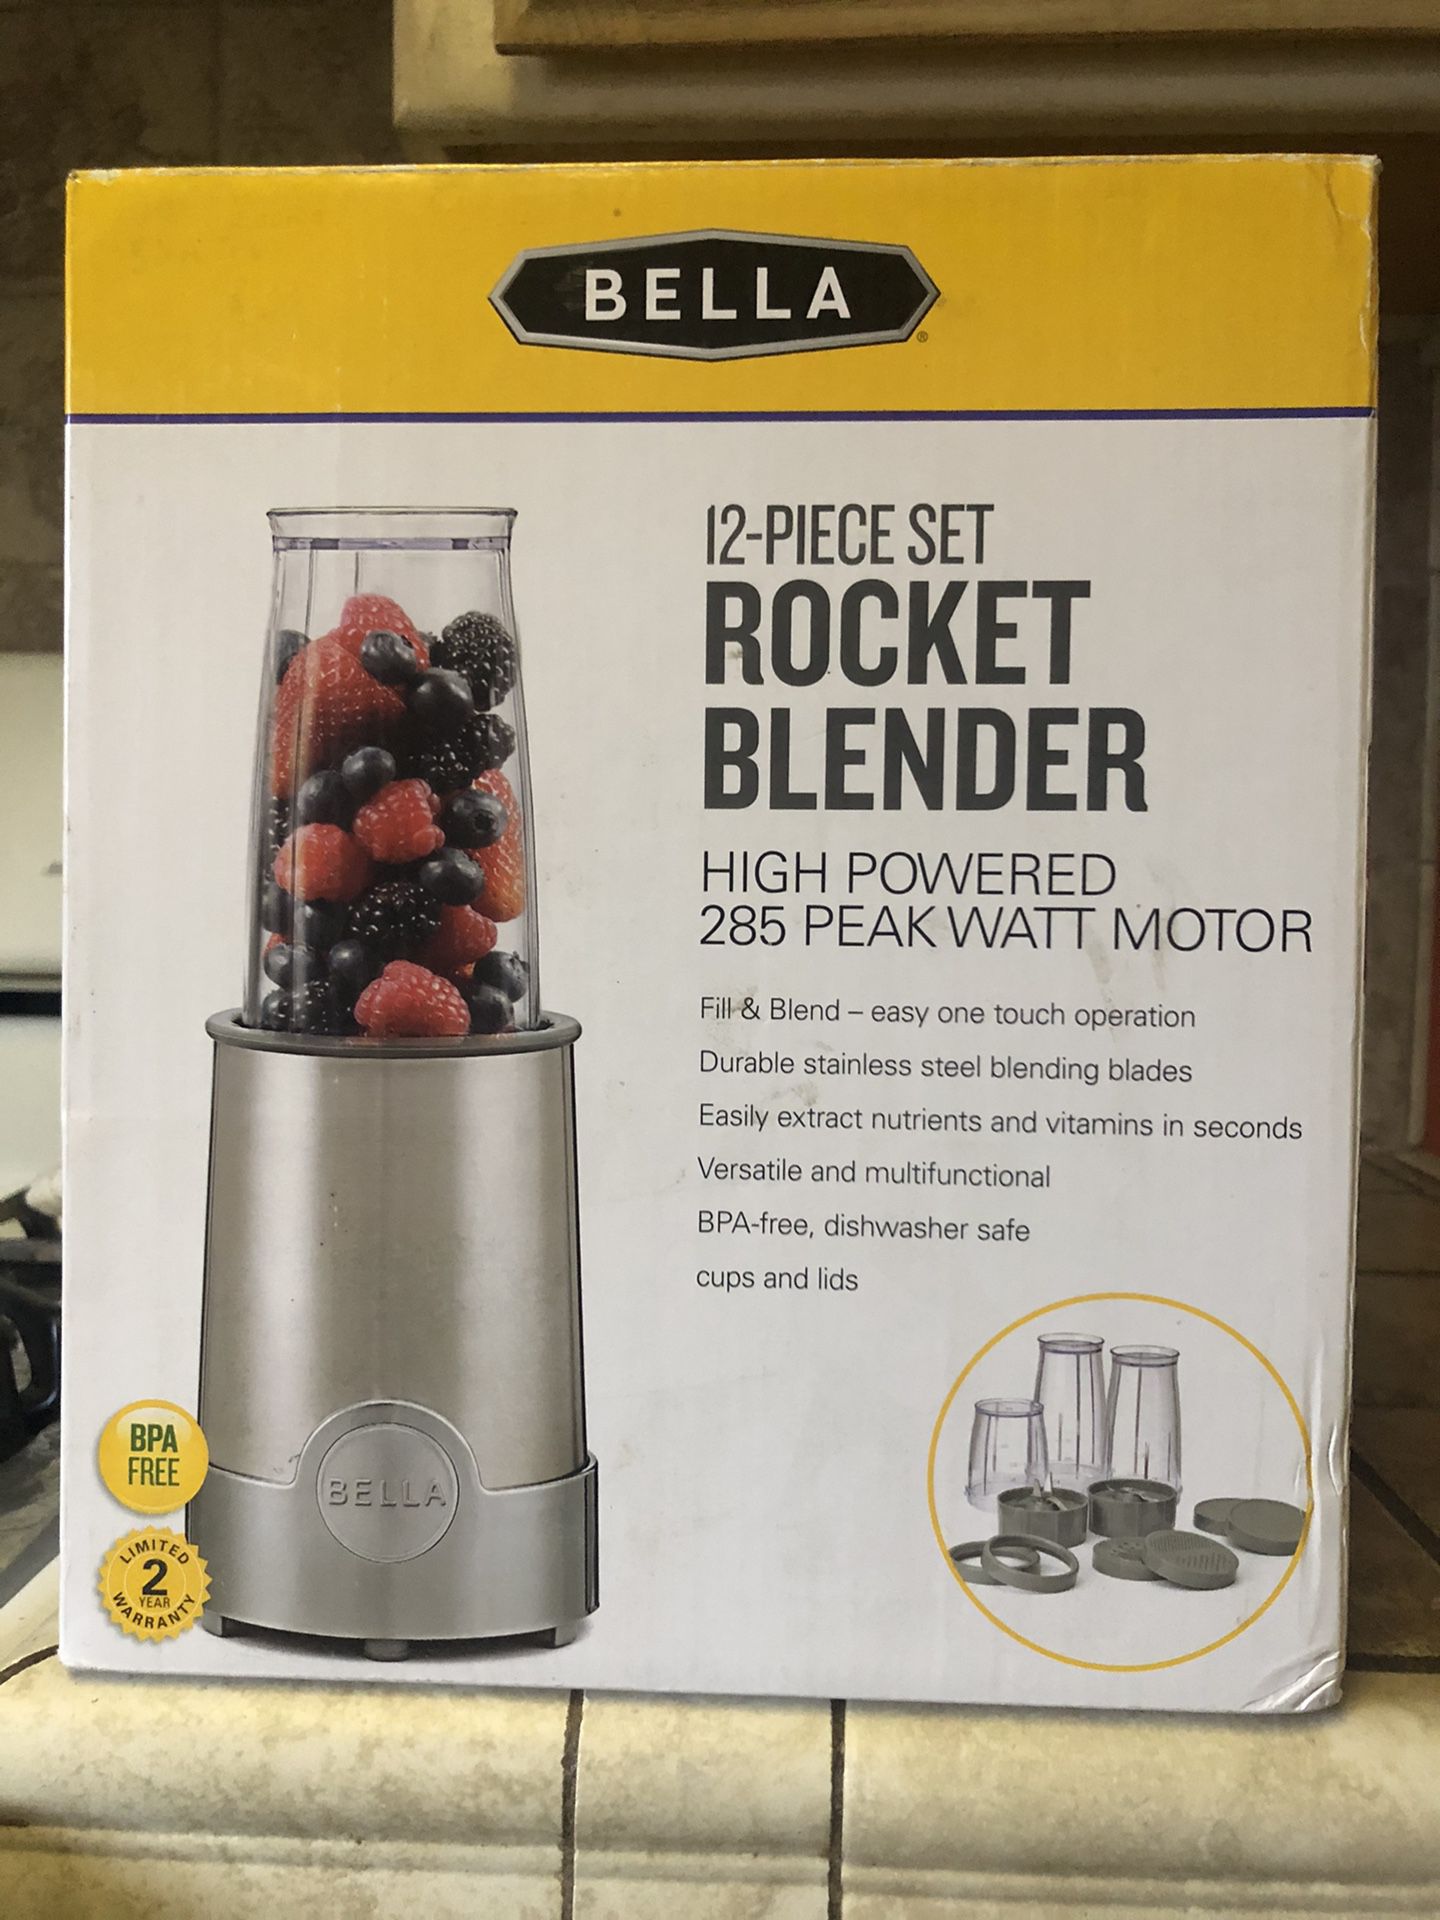 Rocket blender 12 piece